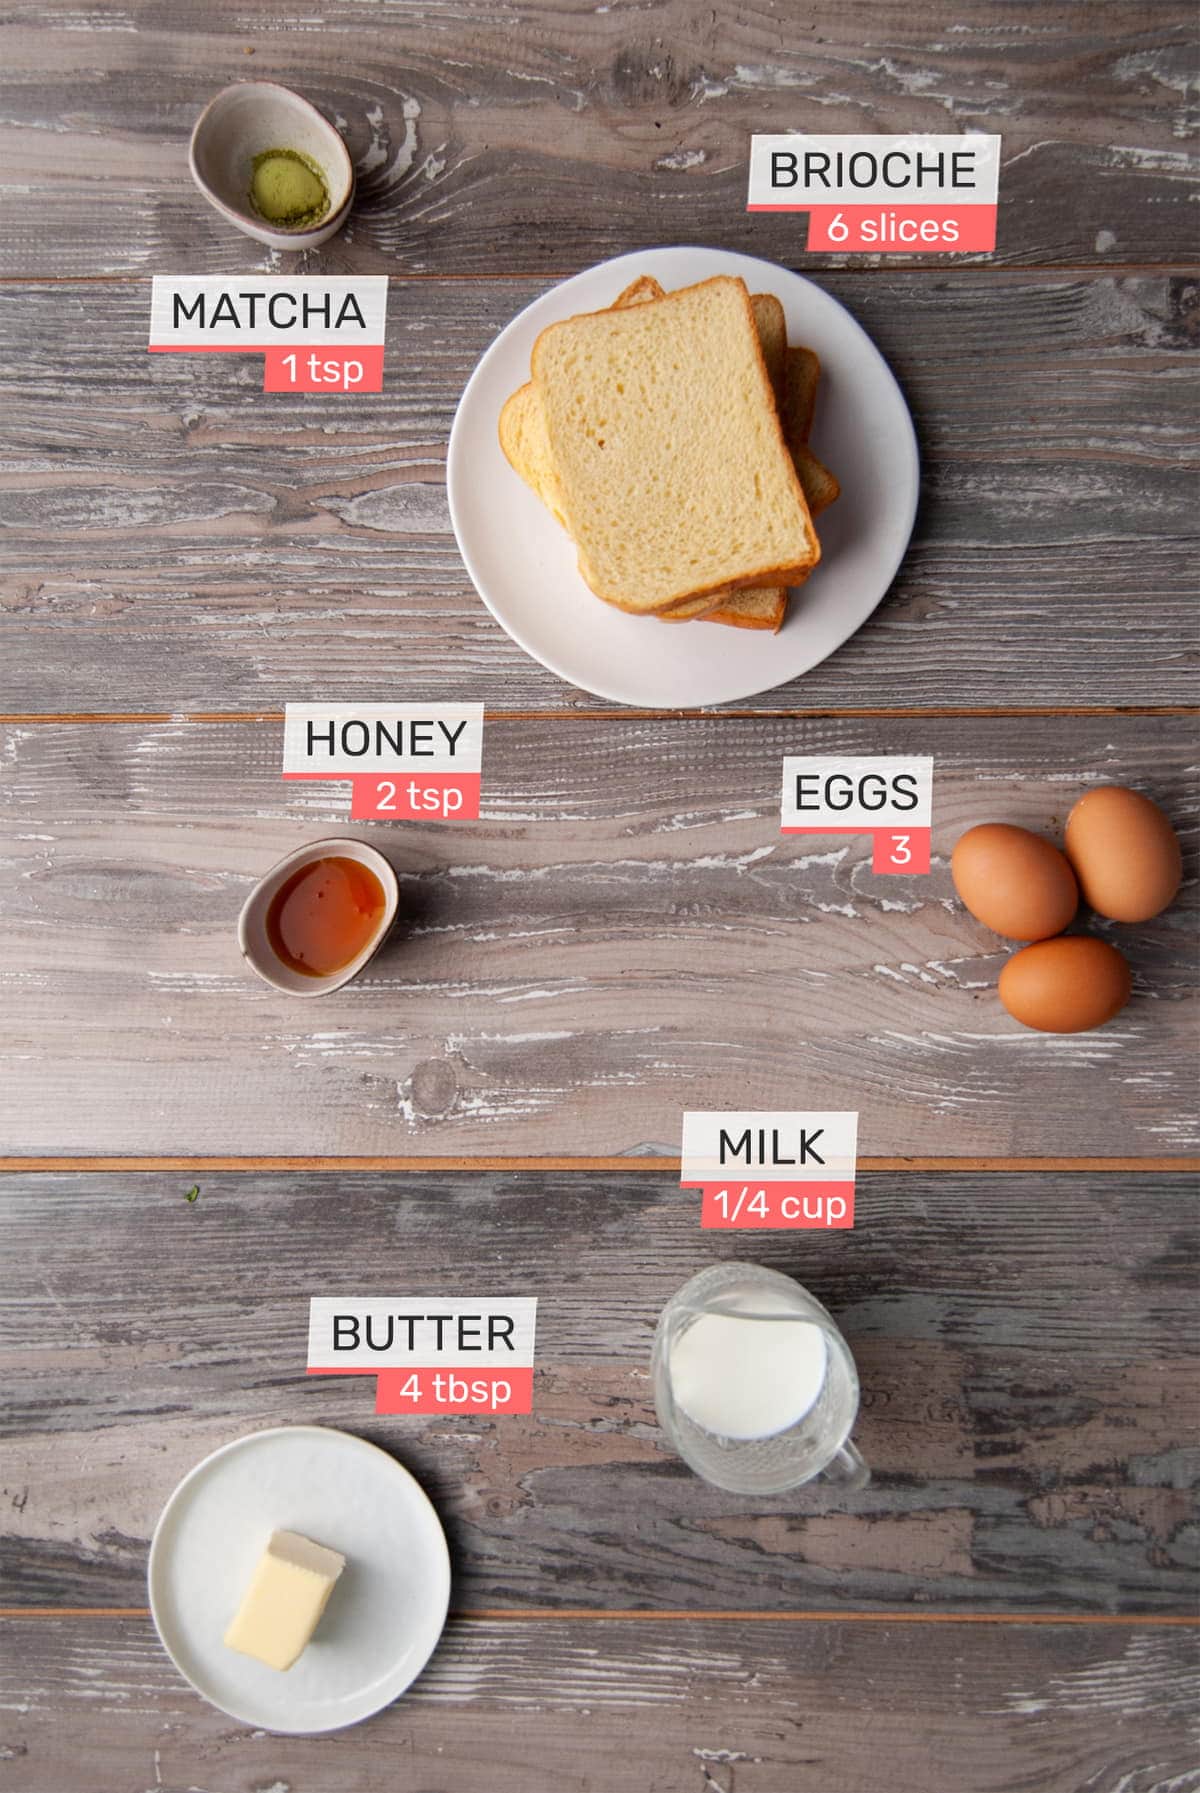 matcha powder, brioche bread, honey, eggs, milk, and butter